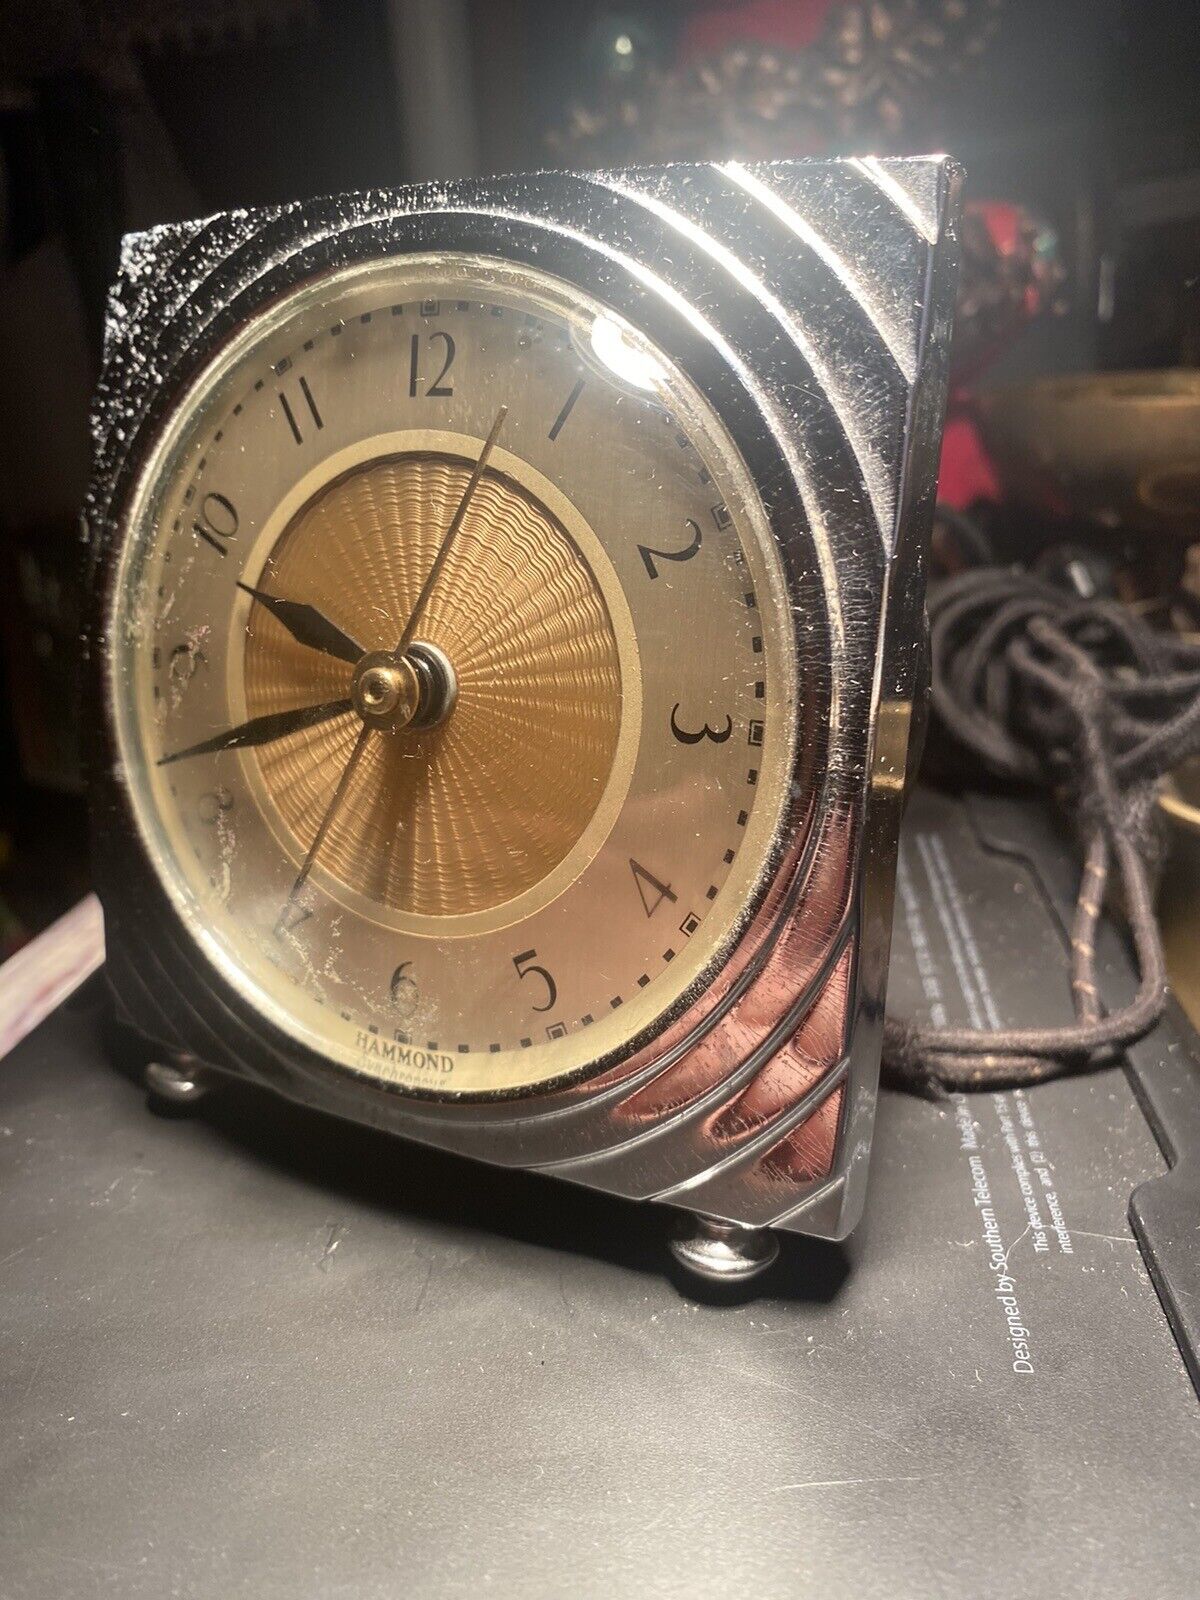 Beautiful Vintage Art Deco Hammond Synchronous Electric Clock